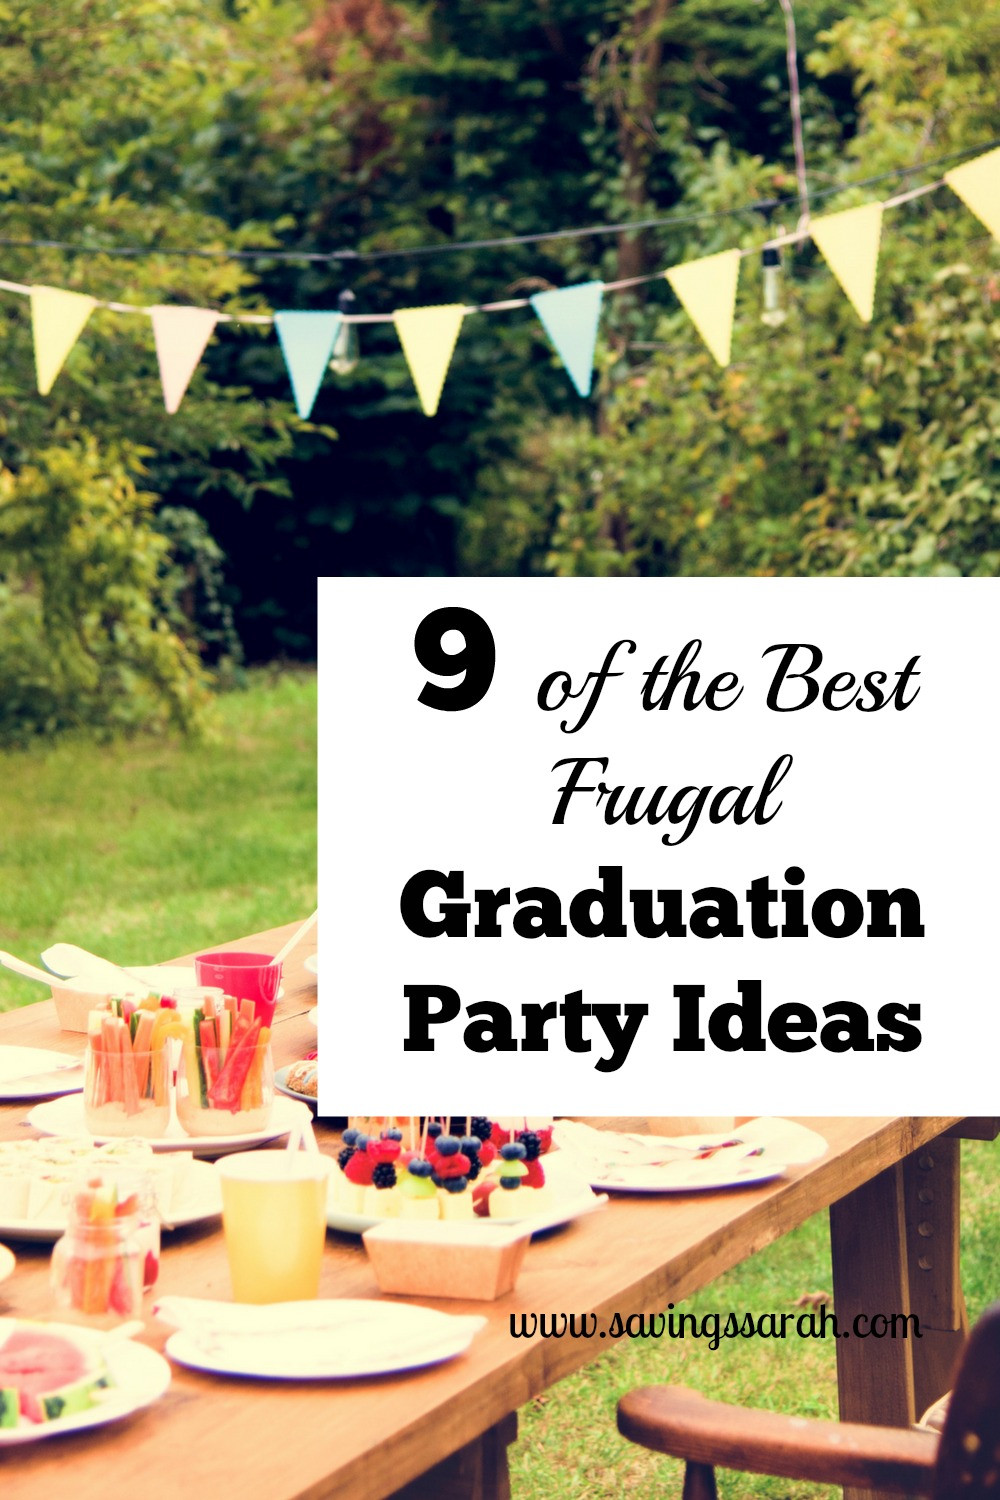 Graduate School Graduation Party Ideas
 9 the Best Frugal Graduation Party Ideas Earning and